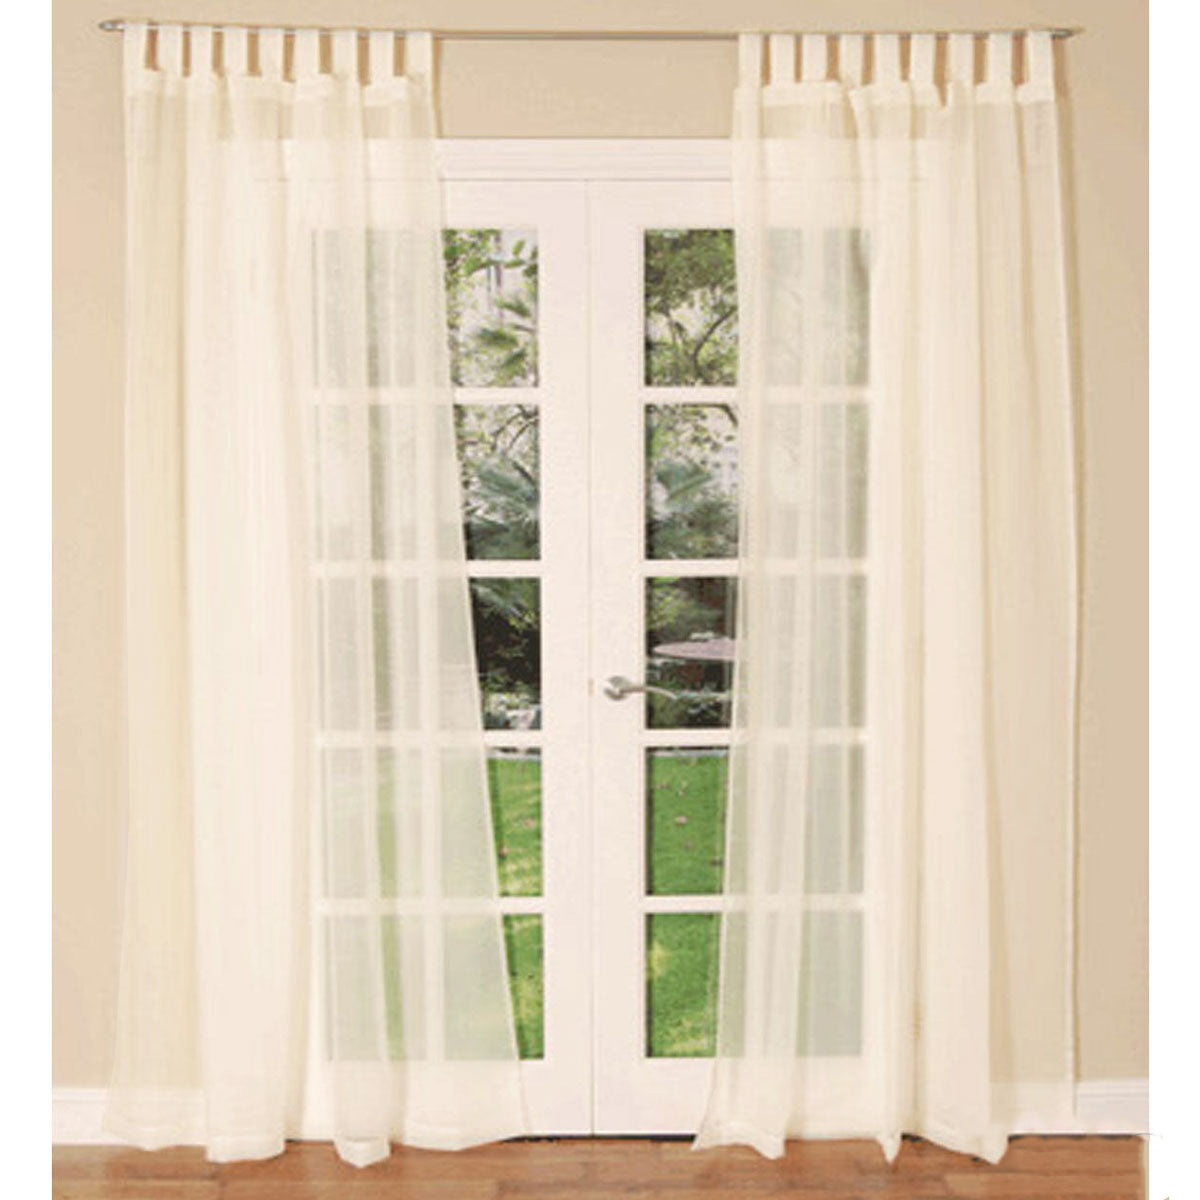 Pair of Sheer Mosquito Net Tab Top Curtains 150 x 240 cm Cream - SILBERSHELL